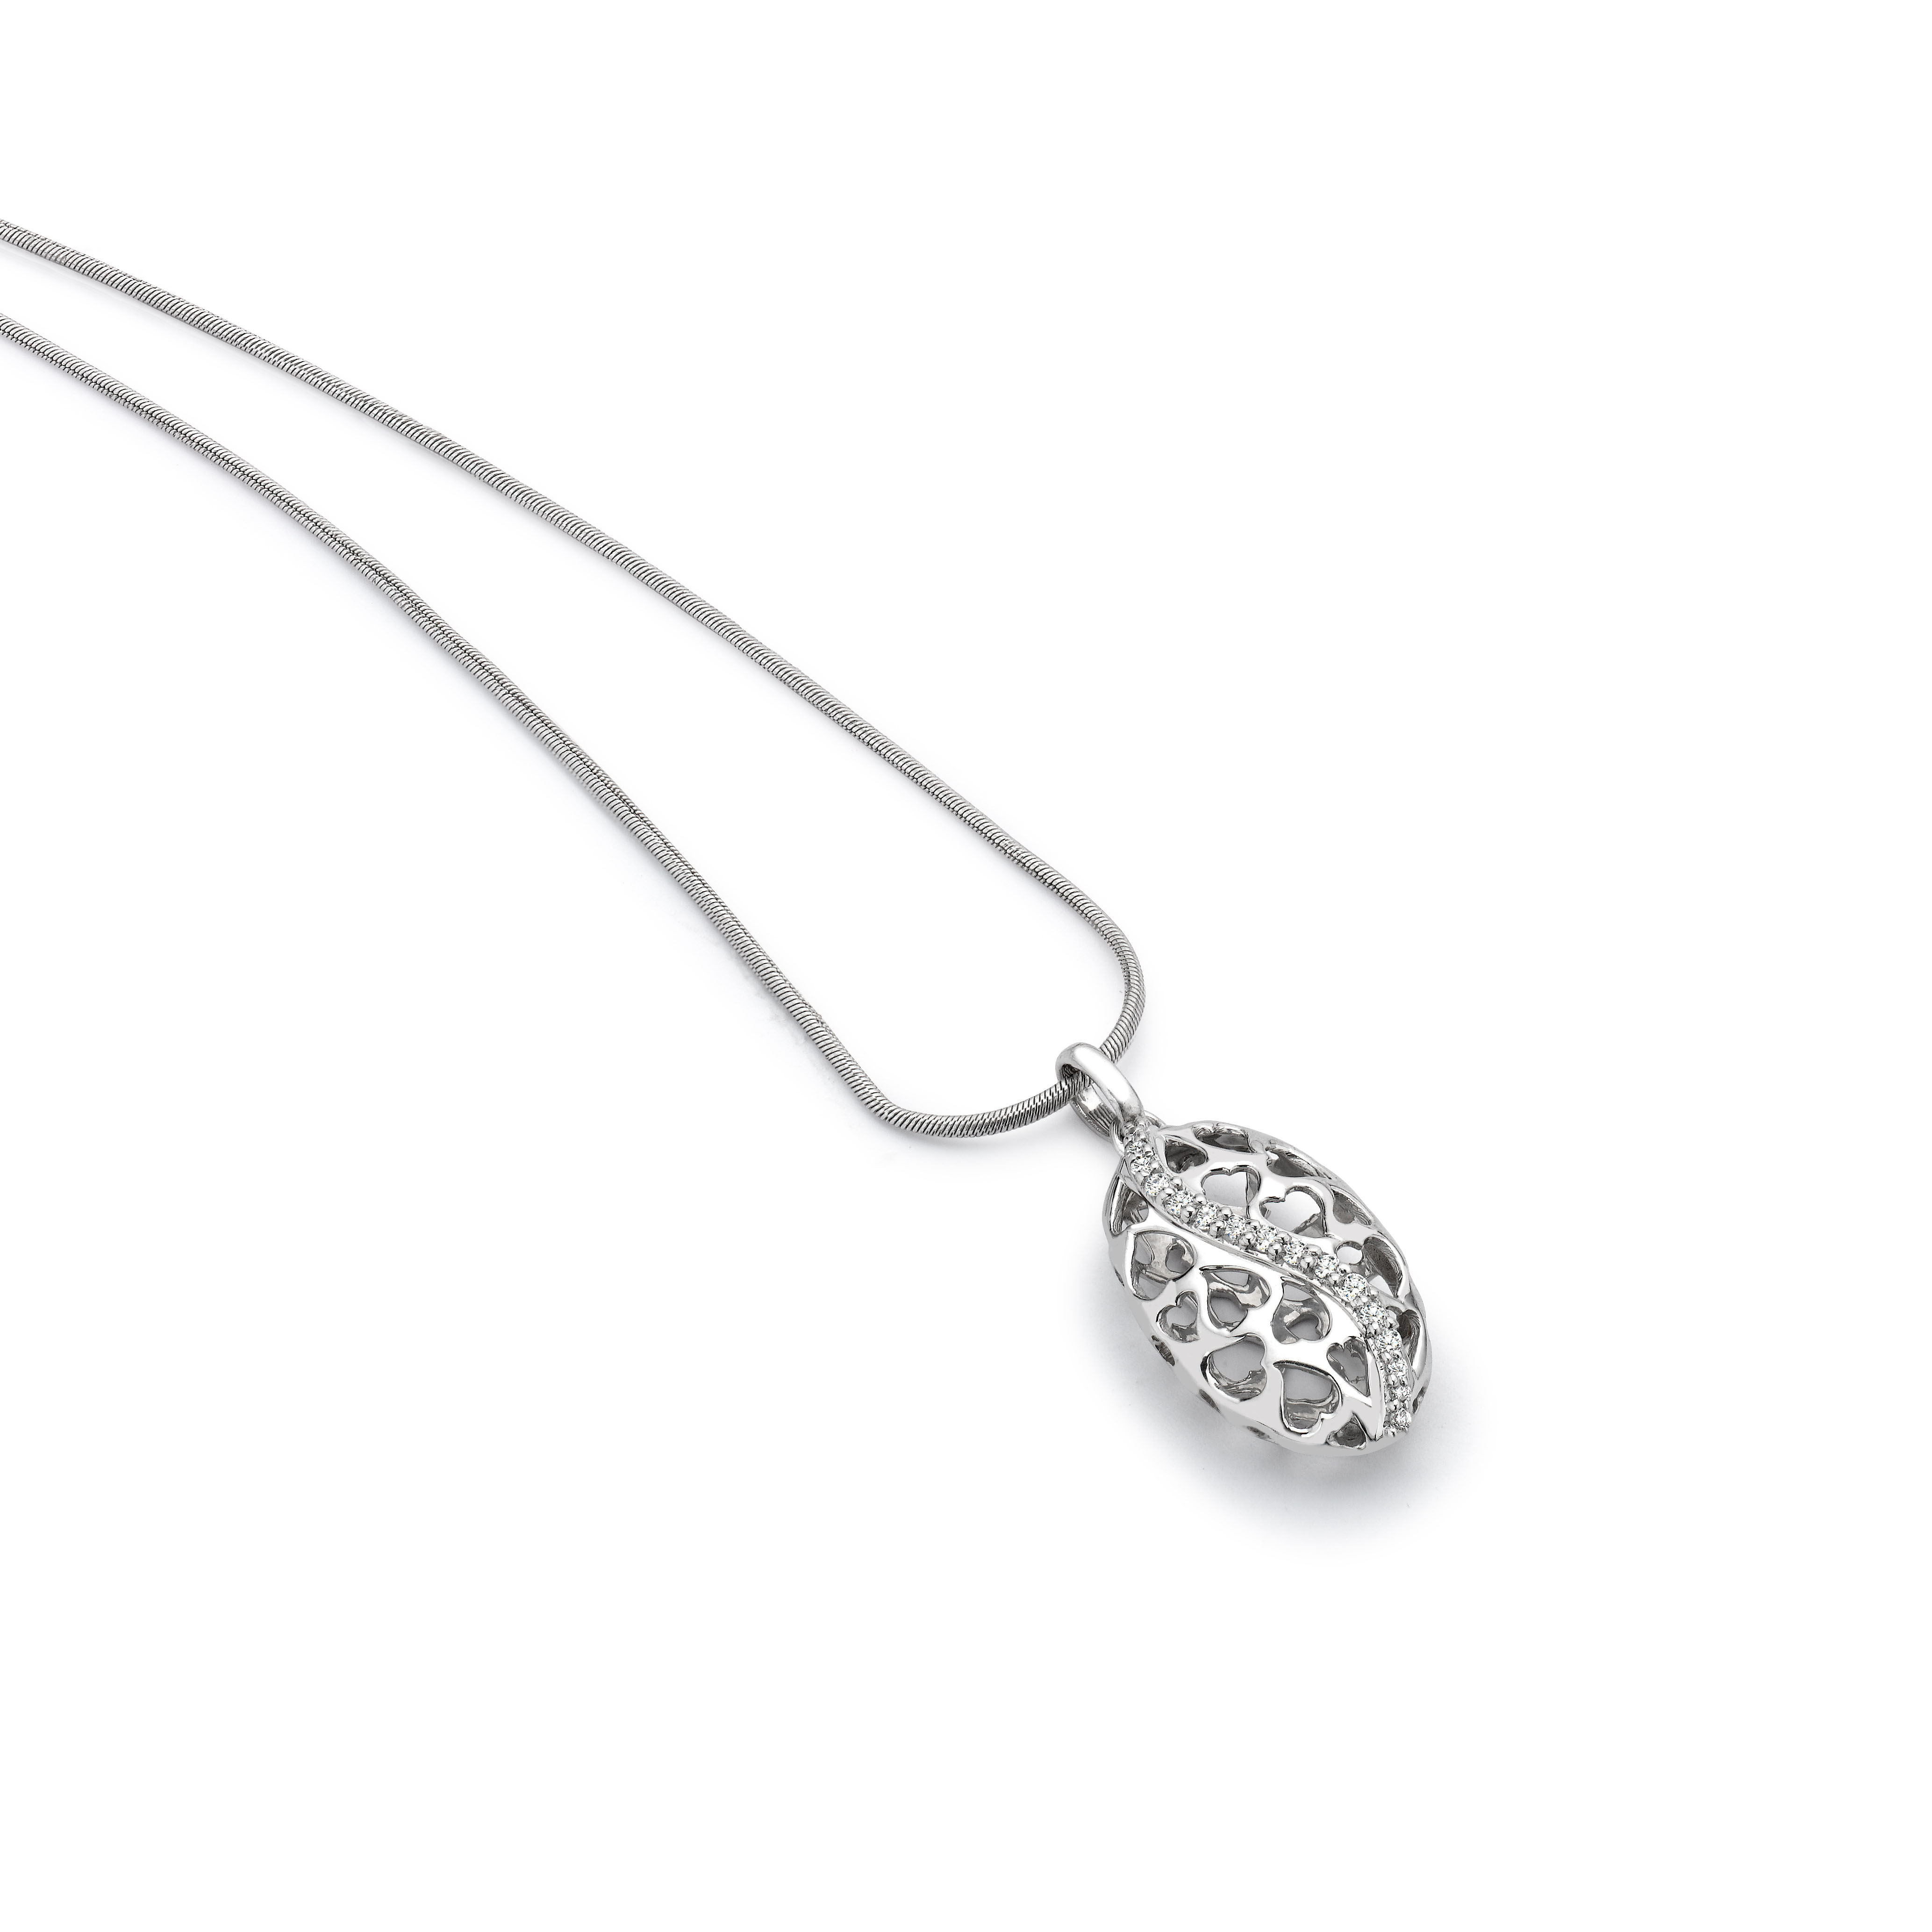 Beautifully crafted platinum pendant by Joyalukkas